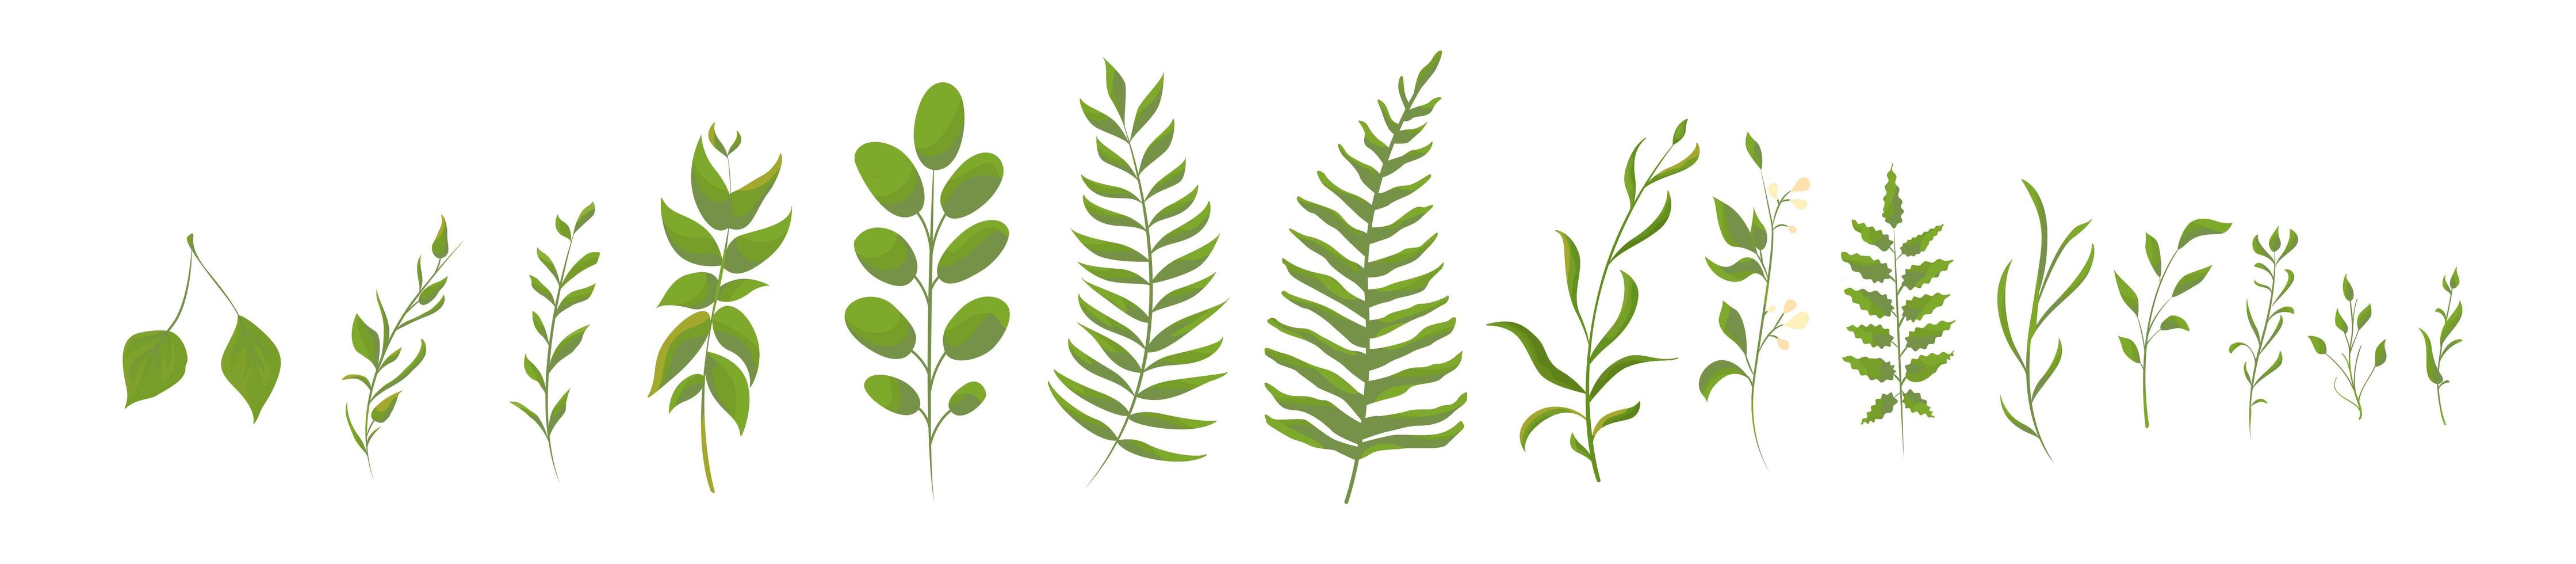 samling av gröna skog ormbunke, tropiska gröna blad vektor